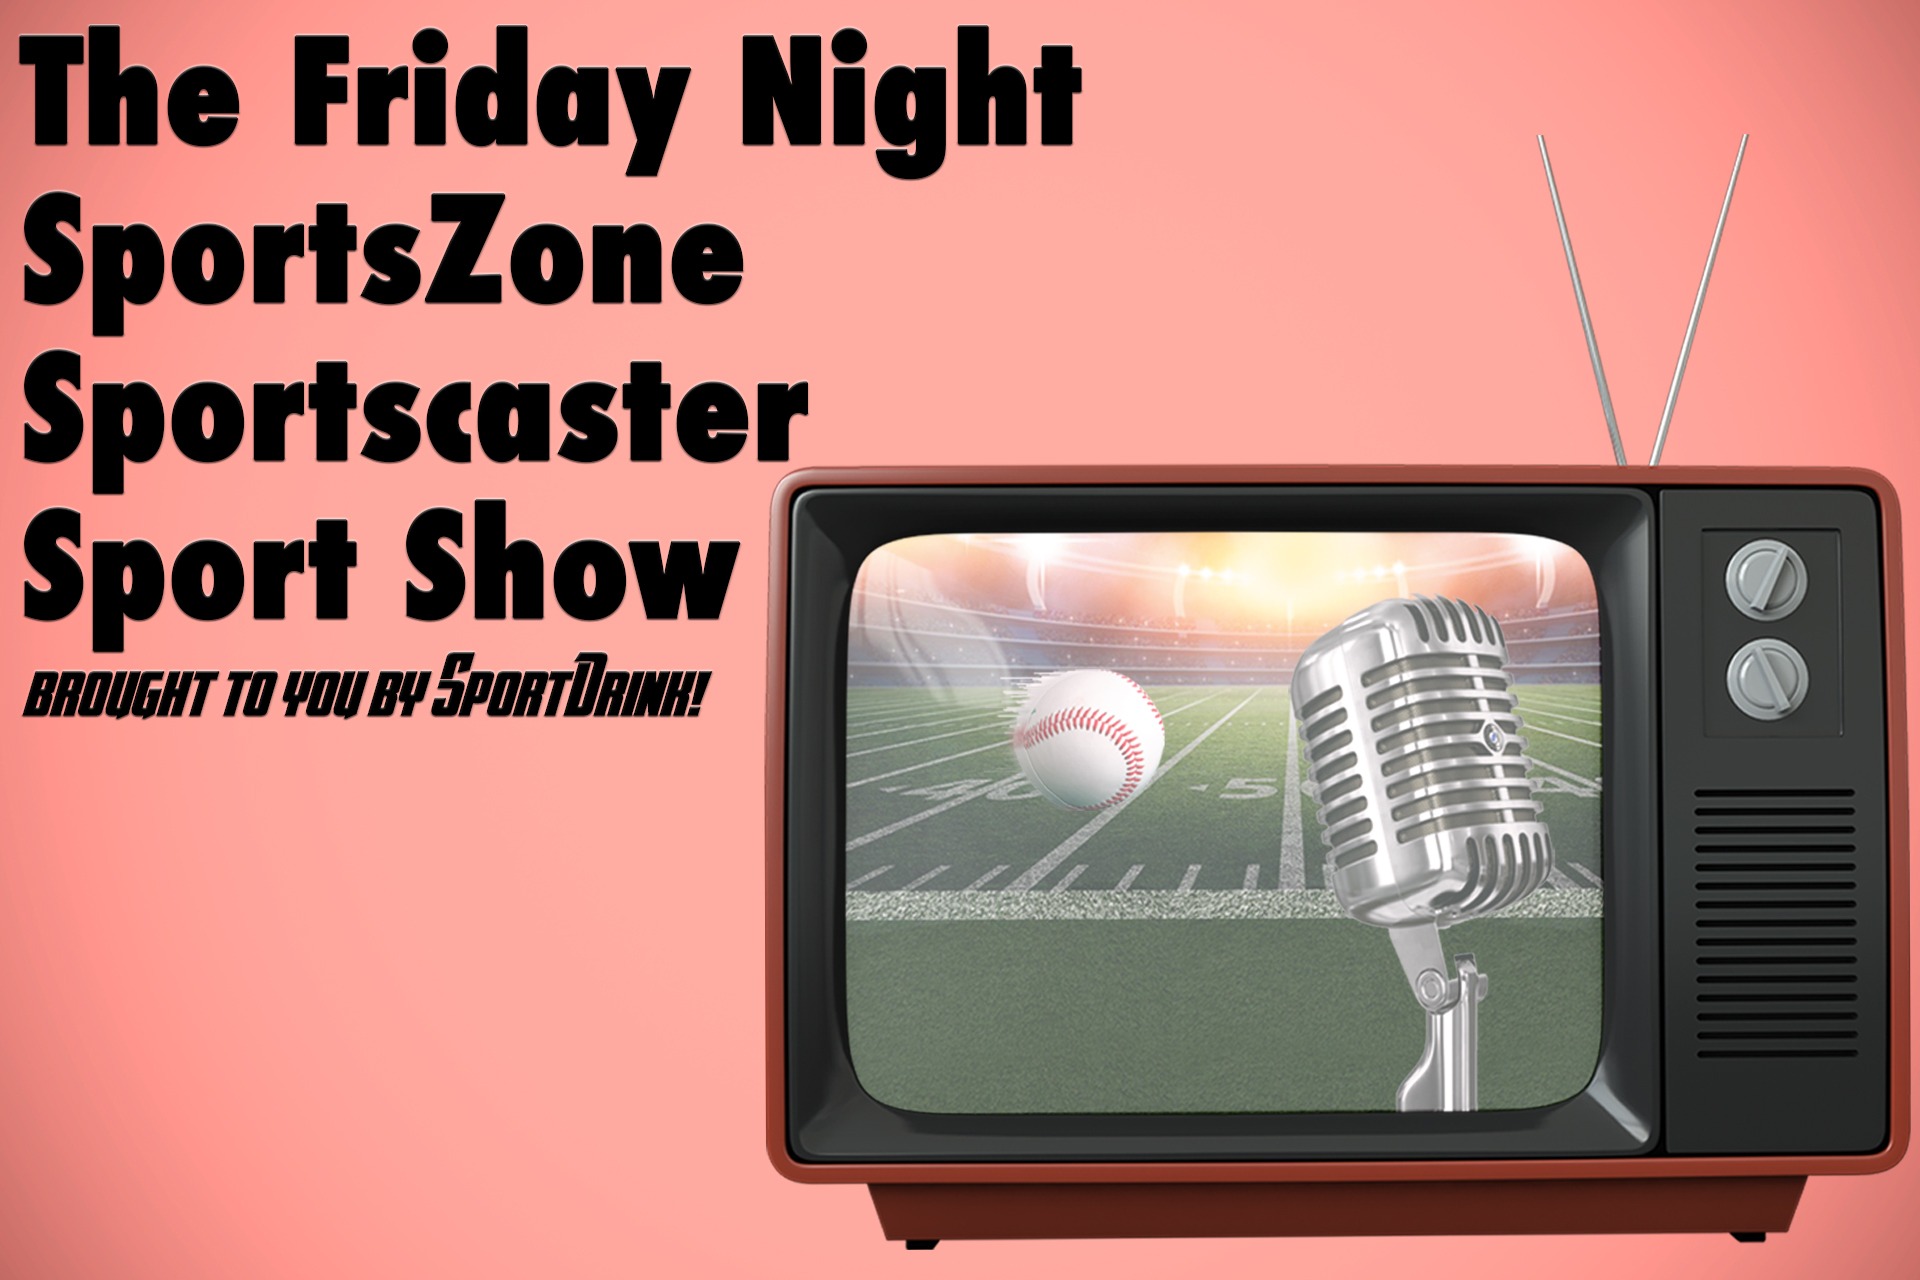 The Friday Night Sports Zone Sportscaster Sport Show